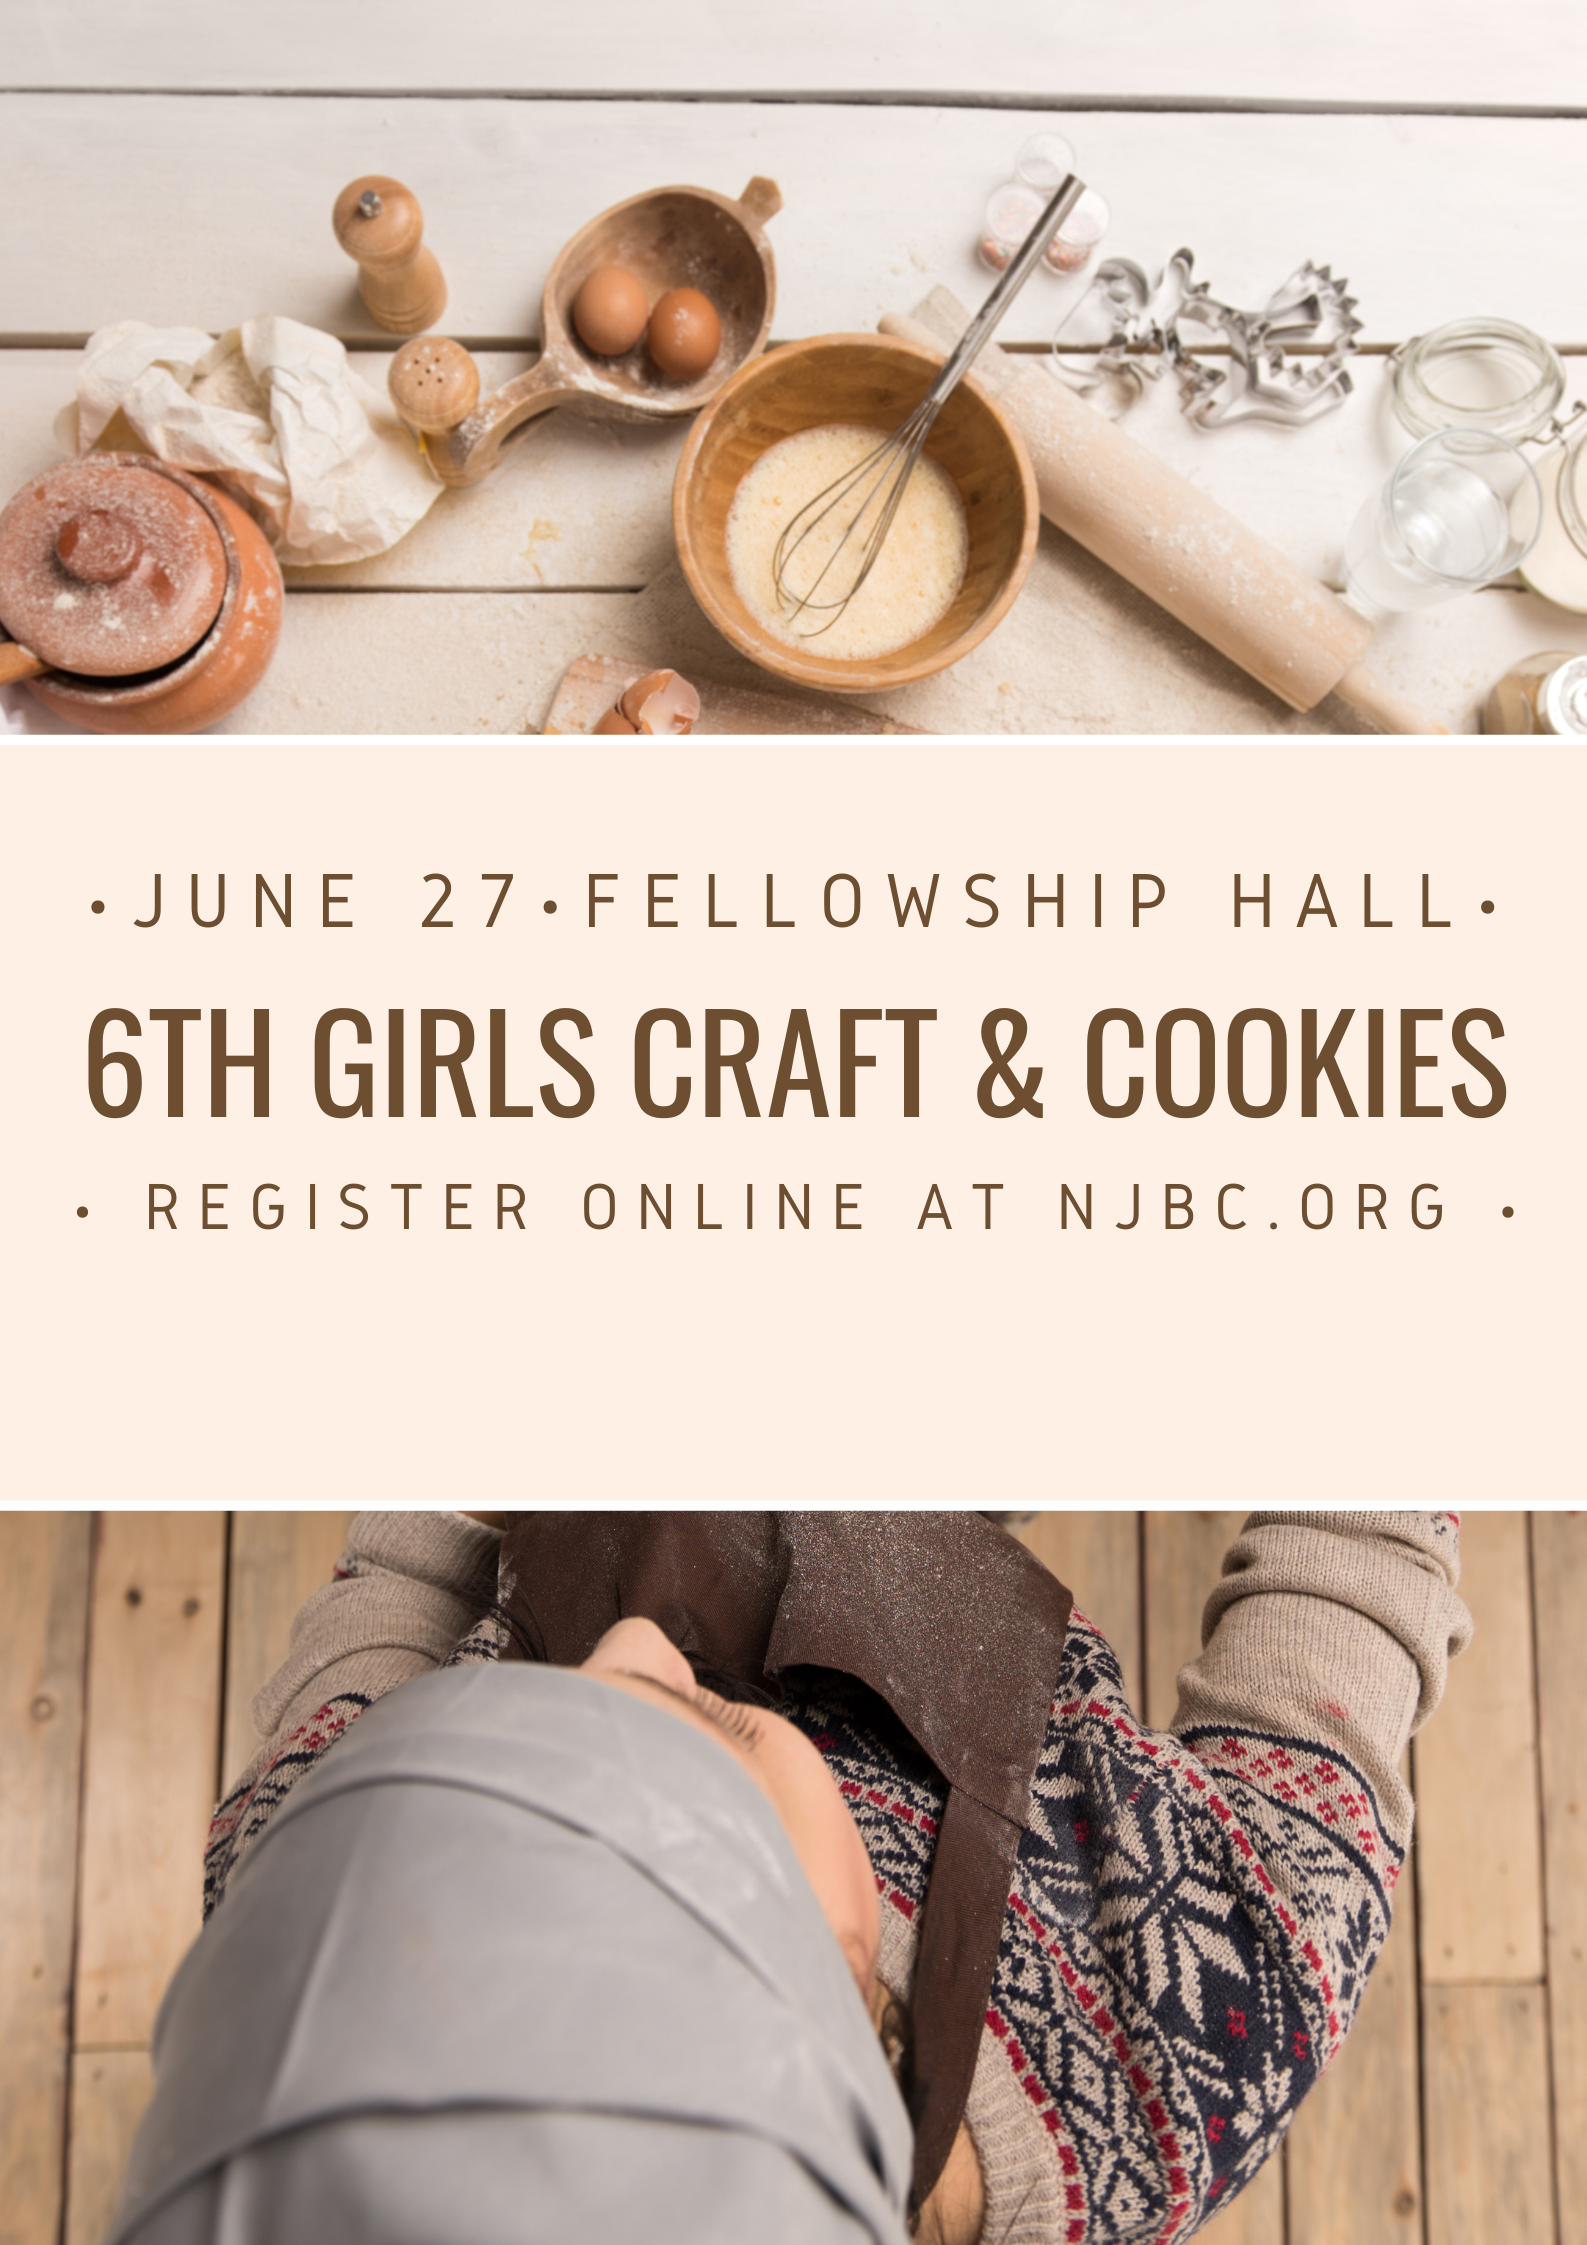 6th Girls Craft & Cookies June 27 